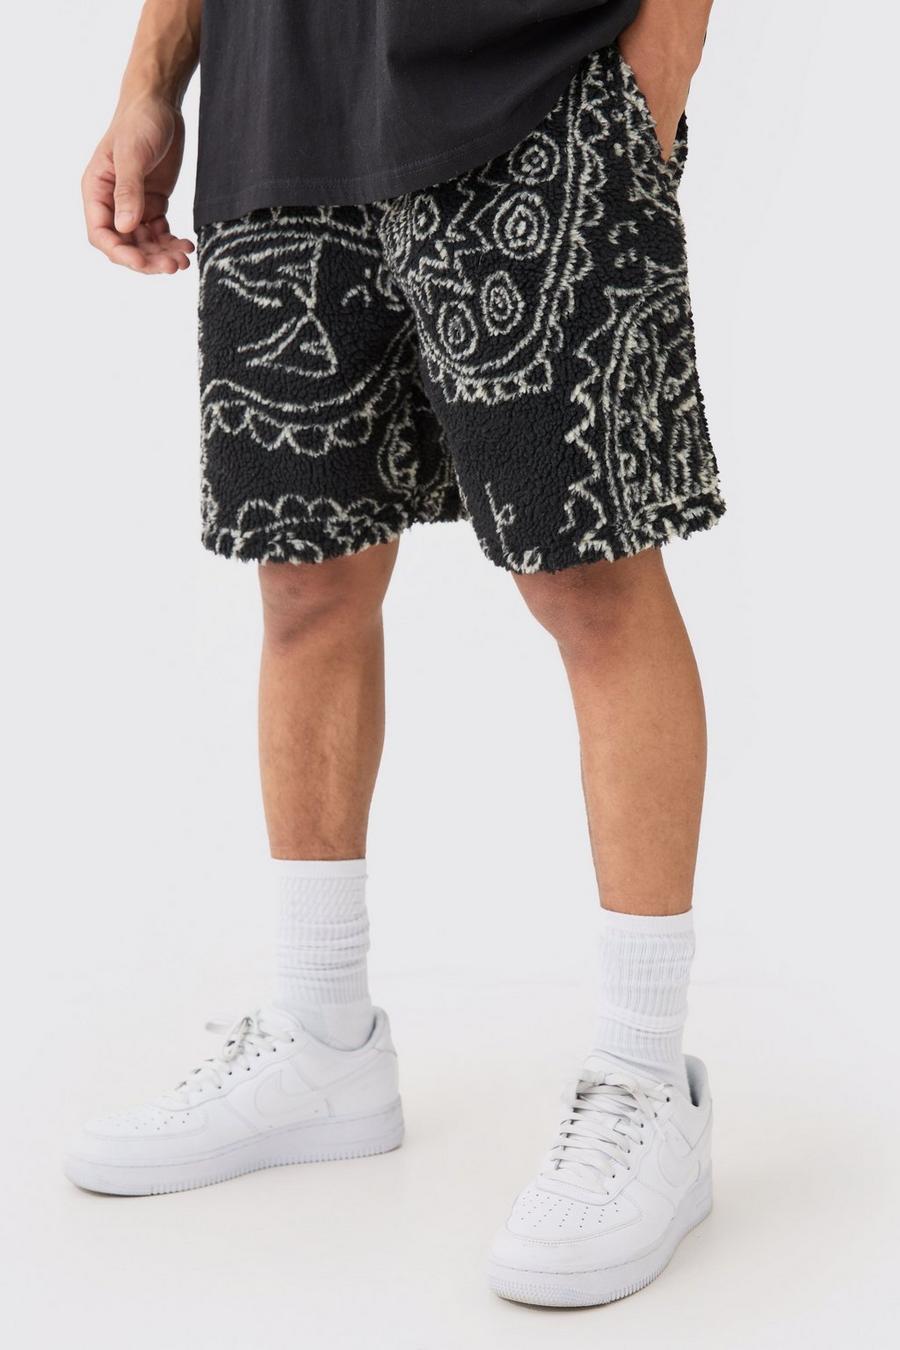 Lockere mittellang Borg-Shorts mit Bandana-Print, Black